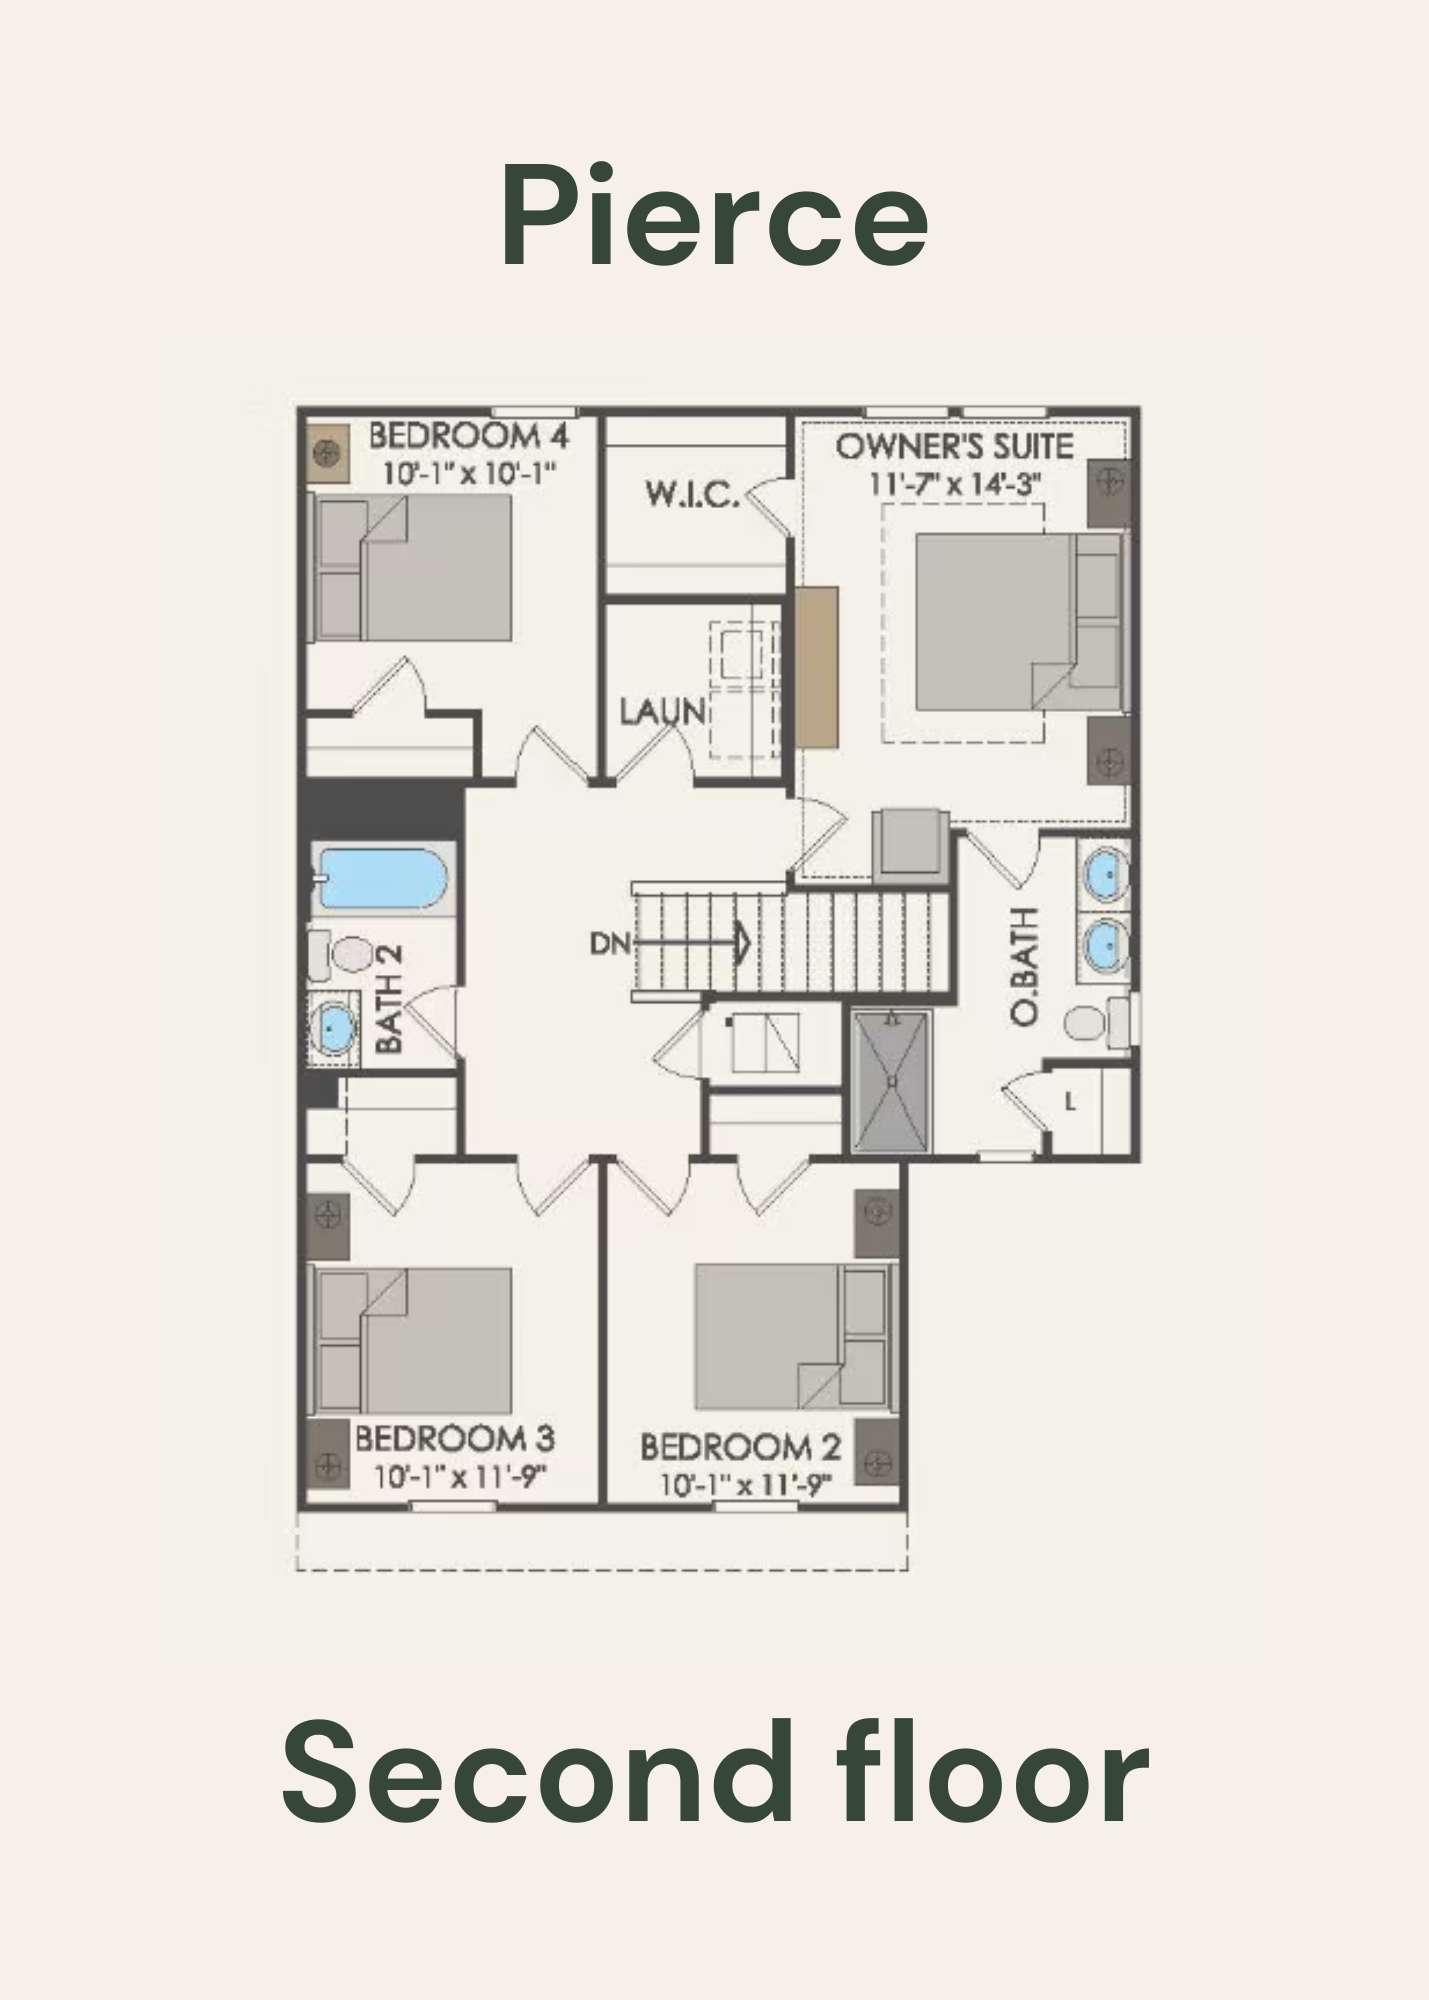 Pierce Second Floor - Floor Plan by Centrex Homes